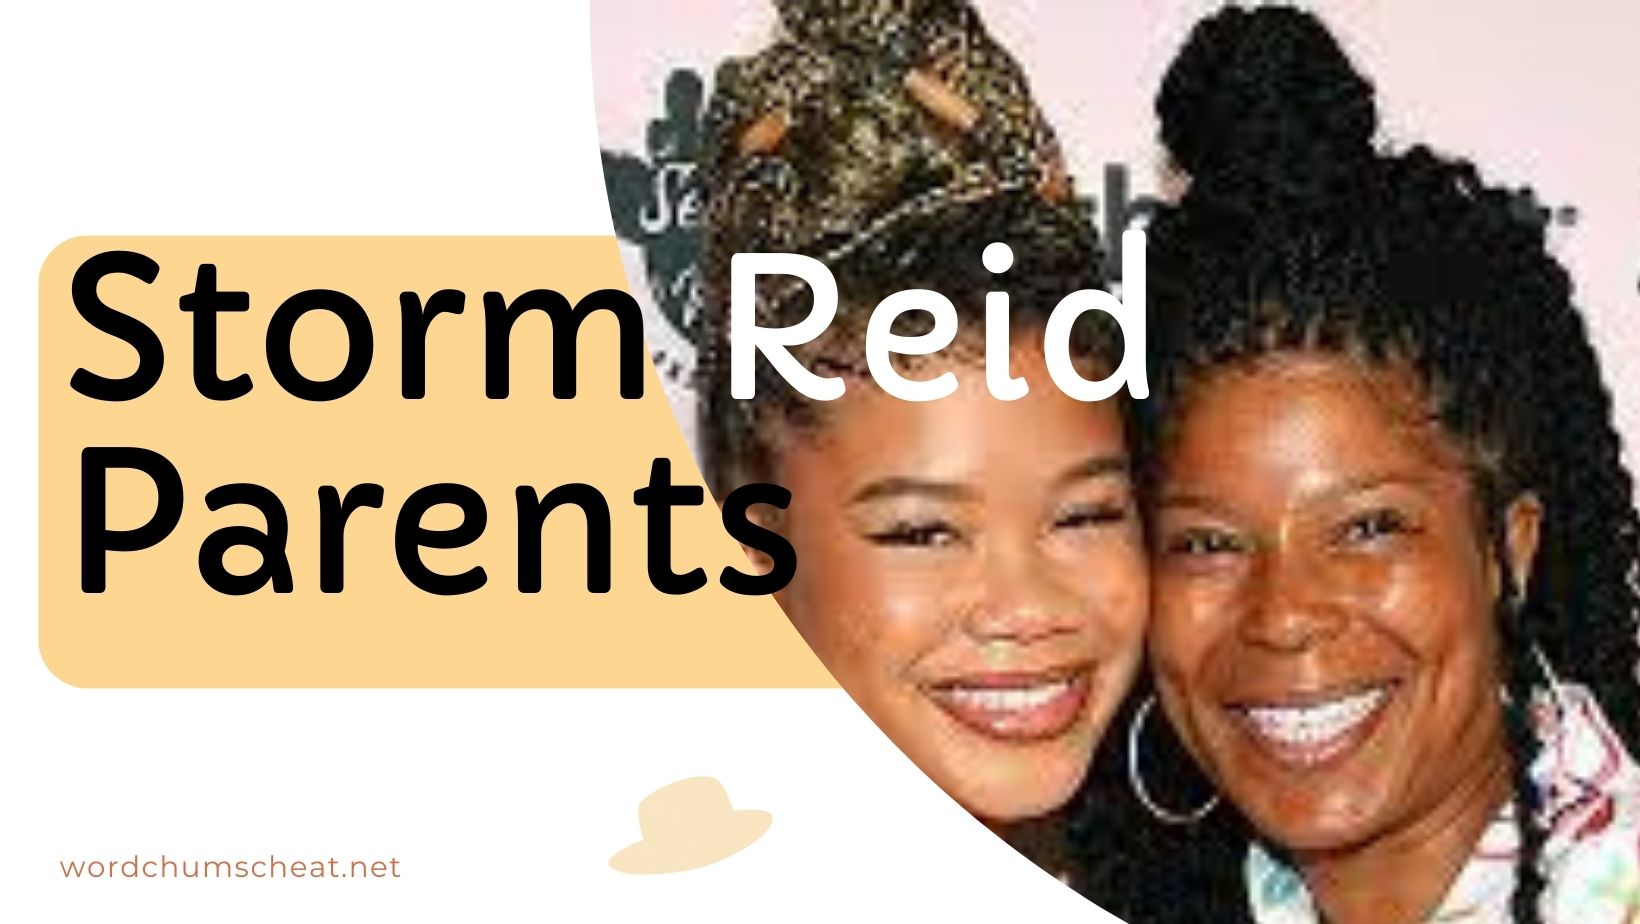 storm reid parents